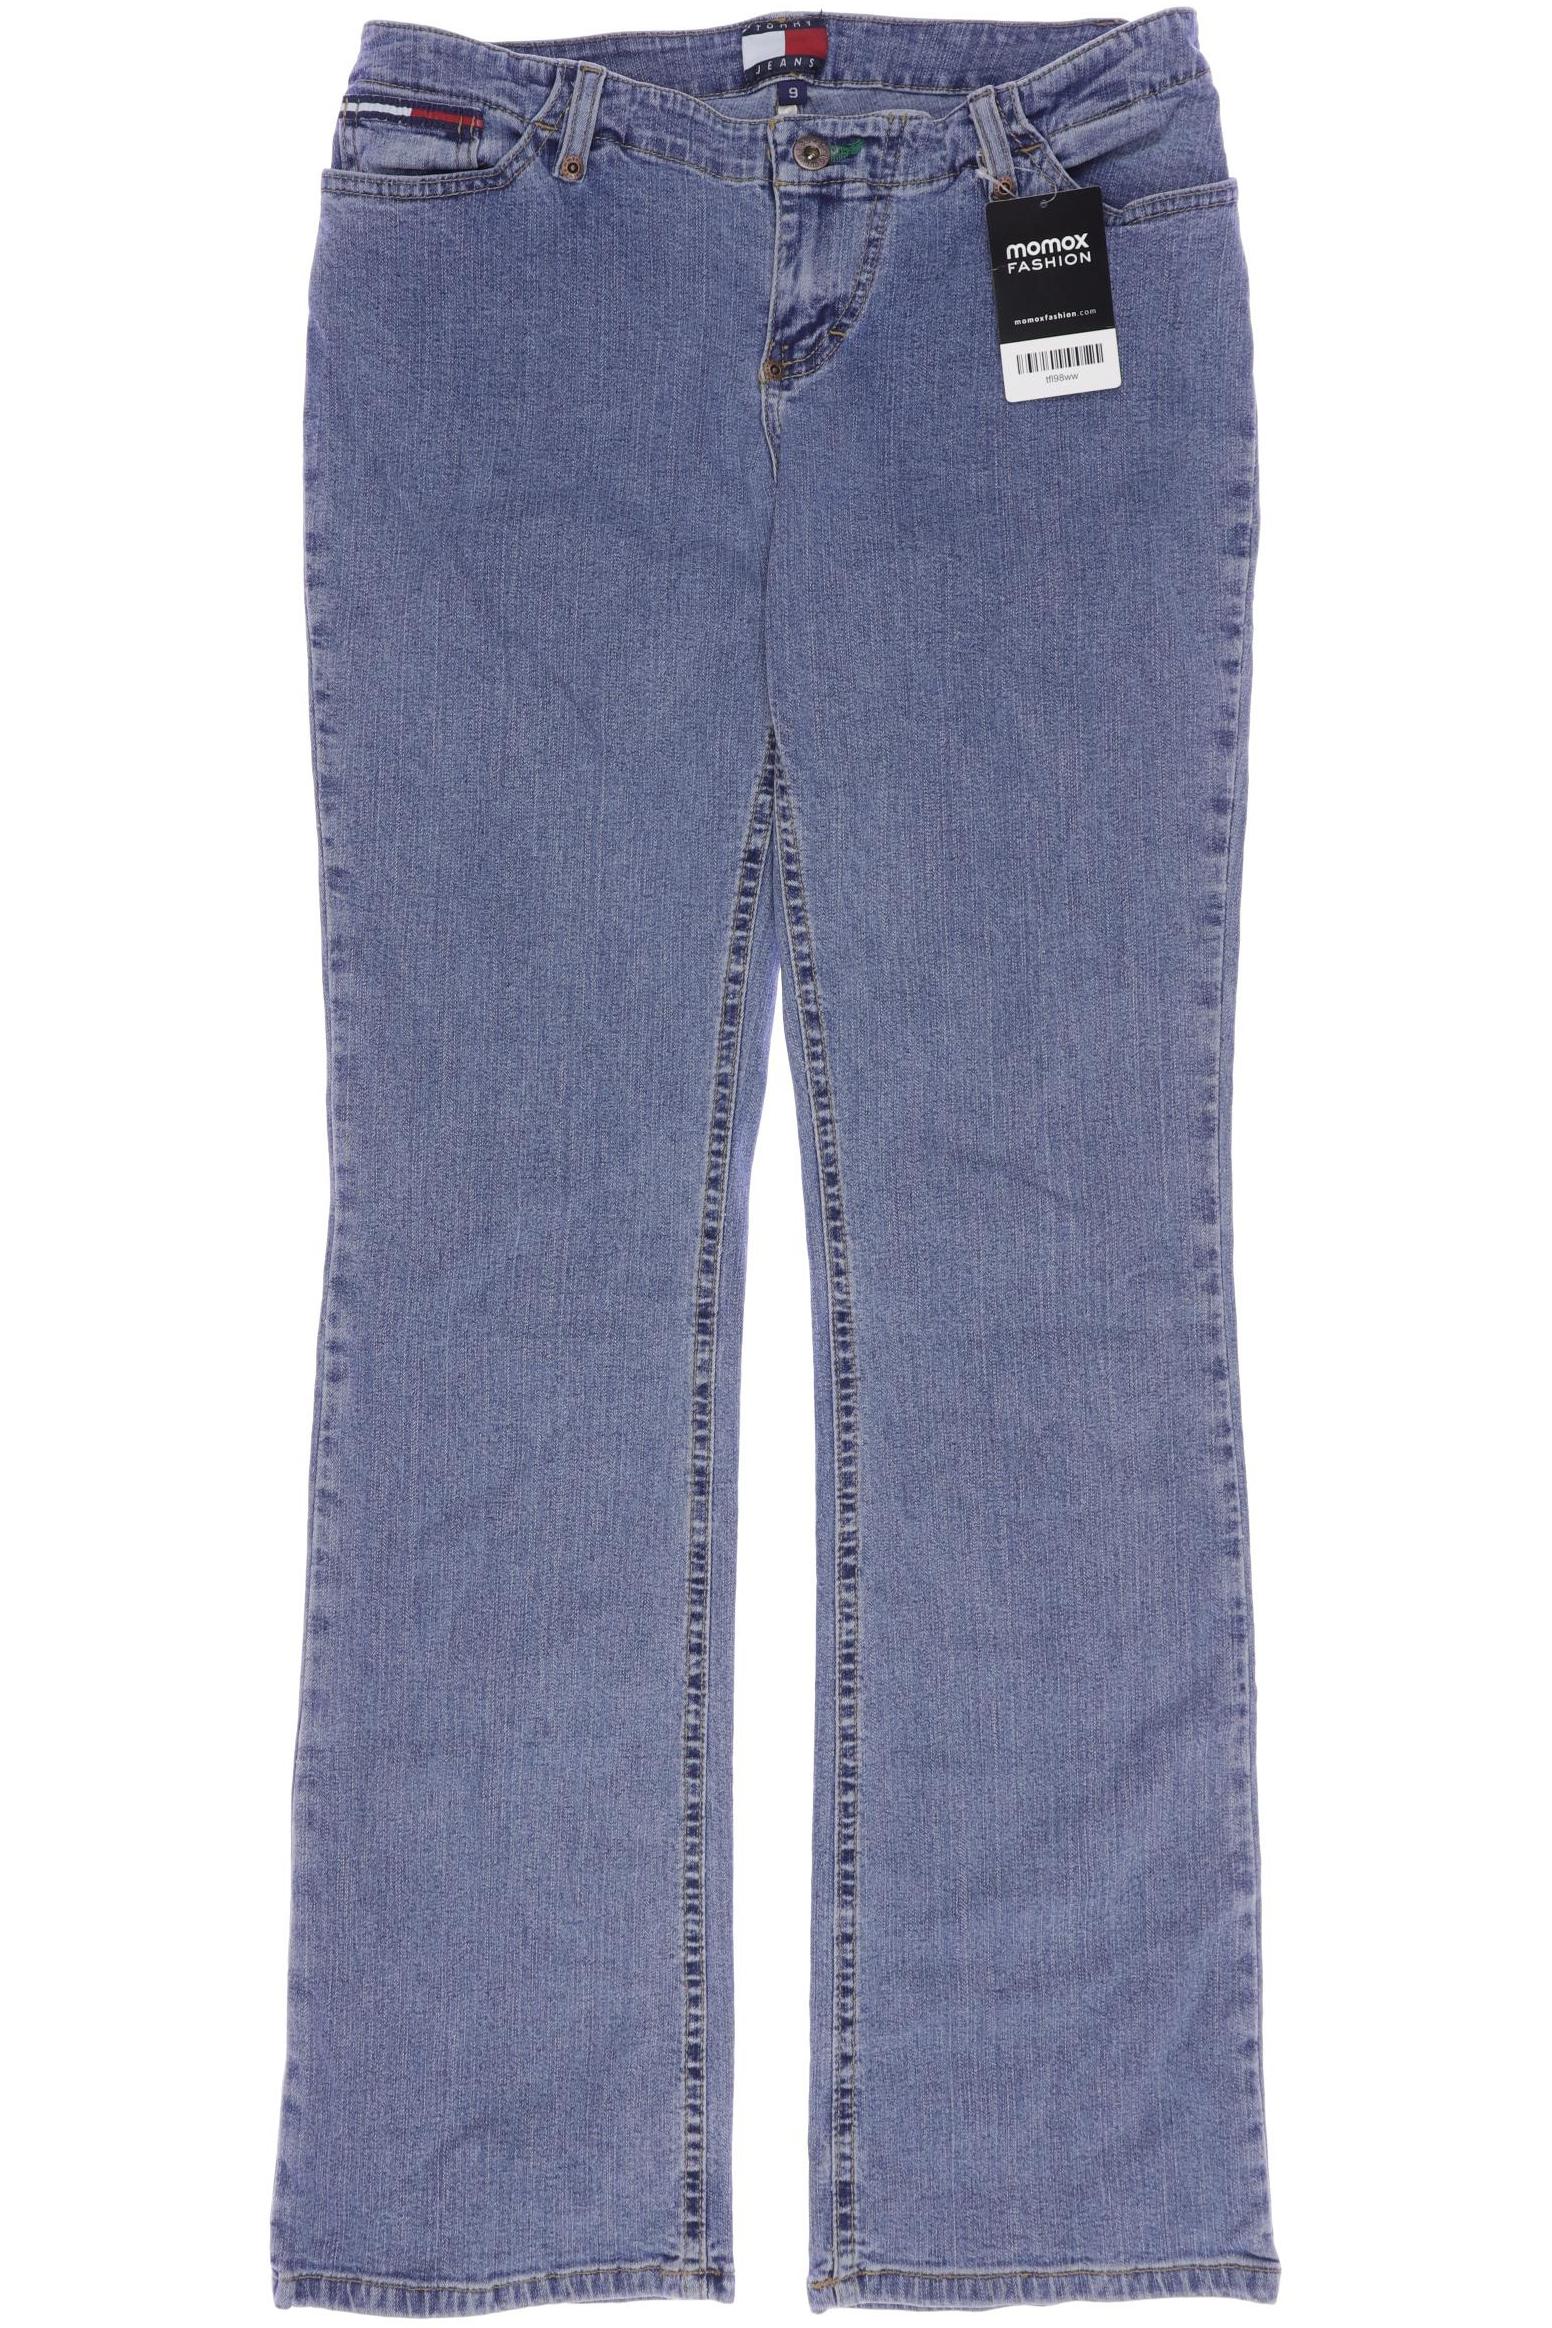 Tommy Jeans Herren Jeans, blau, Gr. 140 von Tommy Jeans